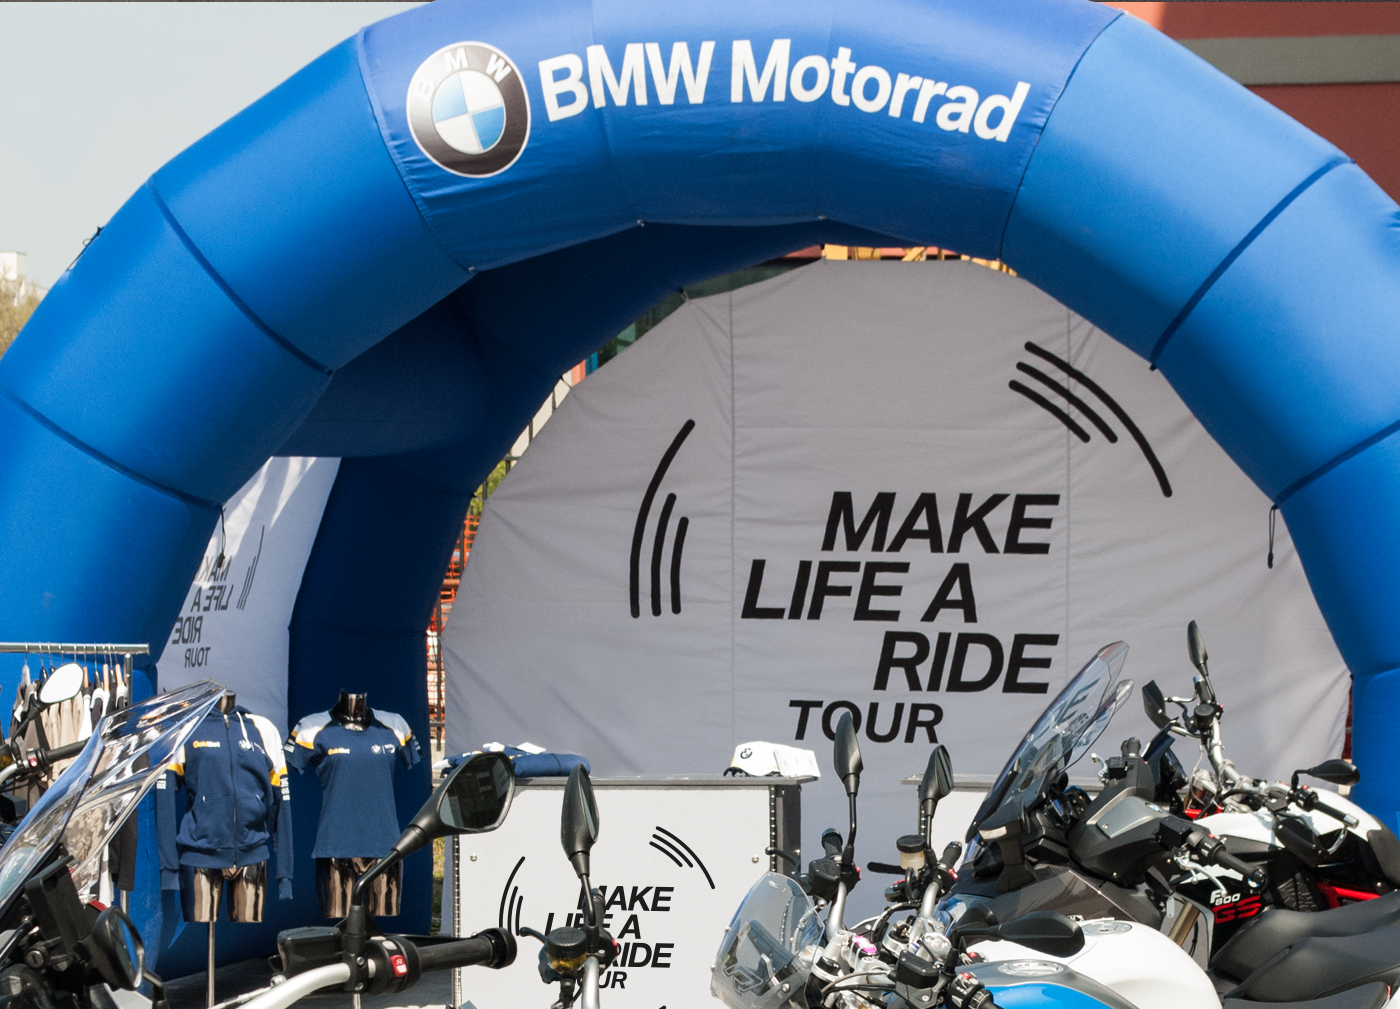 BMW makelifearide rider motorcycle ride